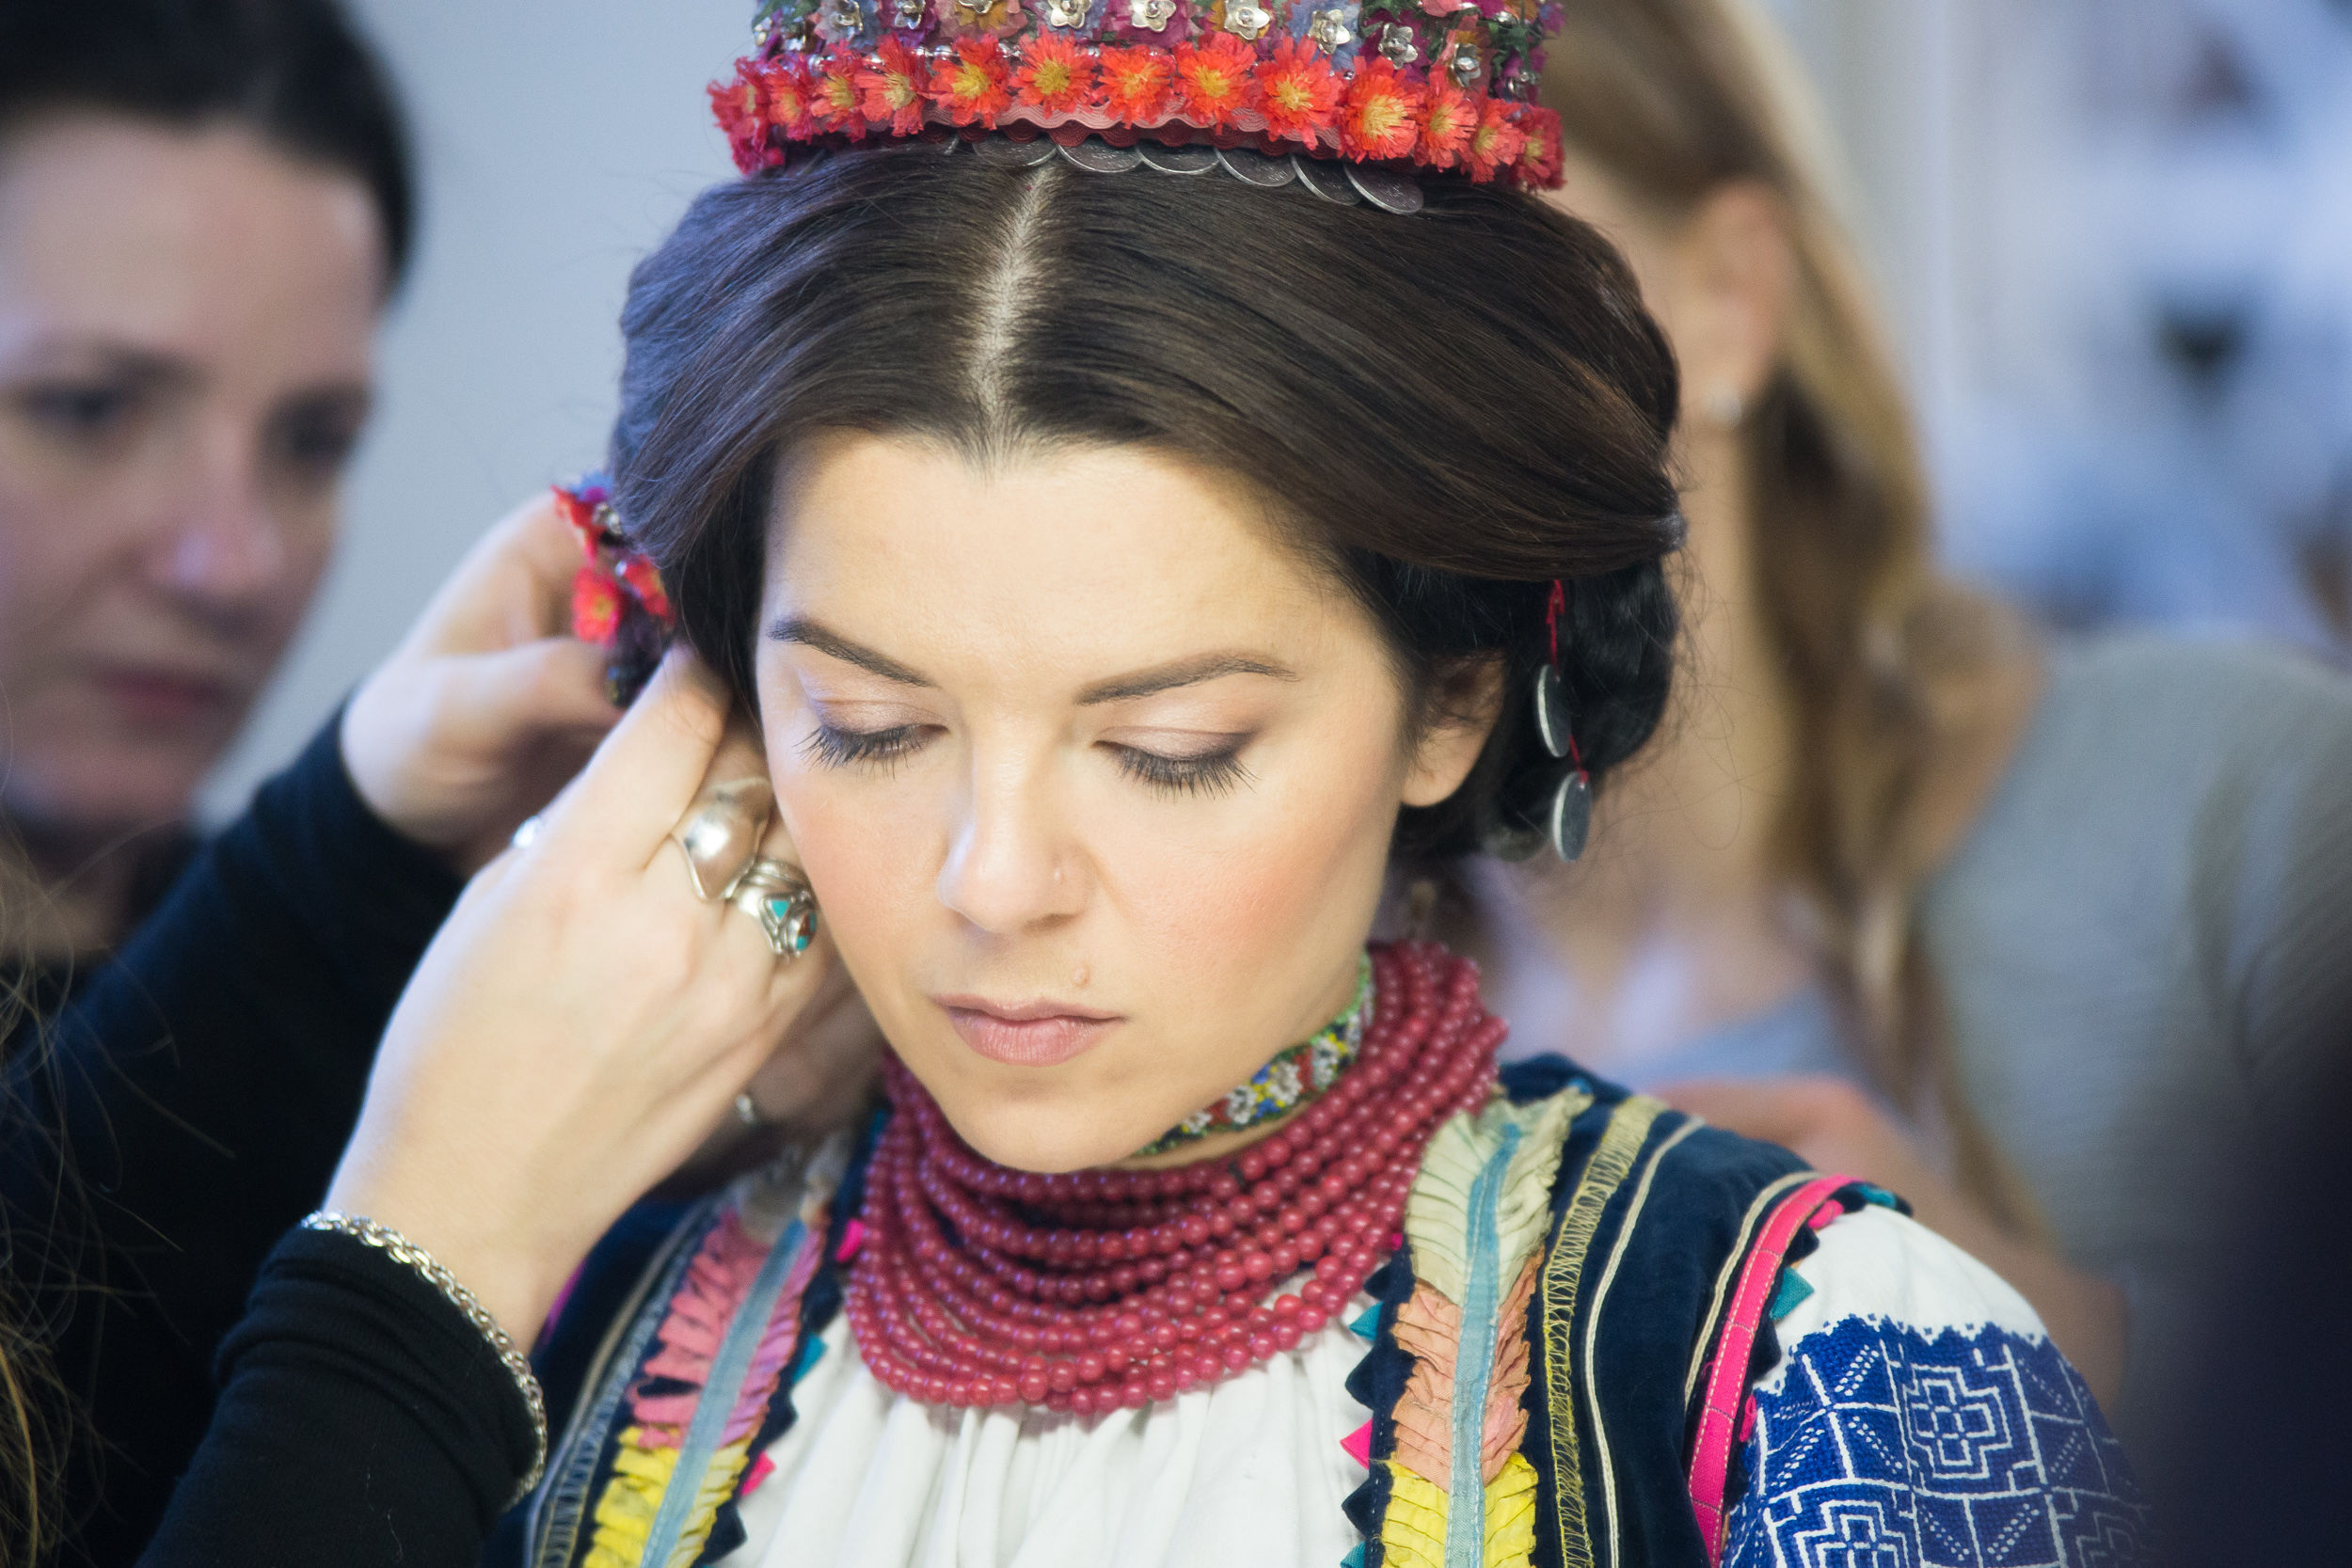 Марічка Падалко зачарувала своїм образом в українському вбранні (фото)